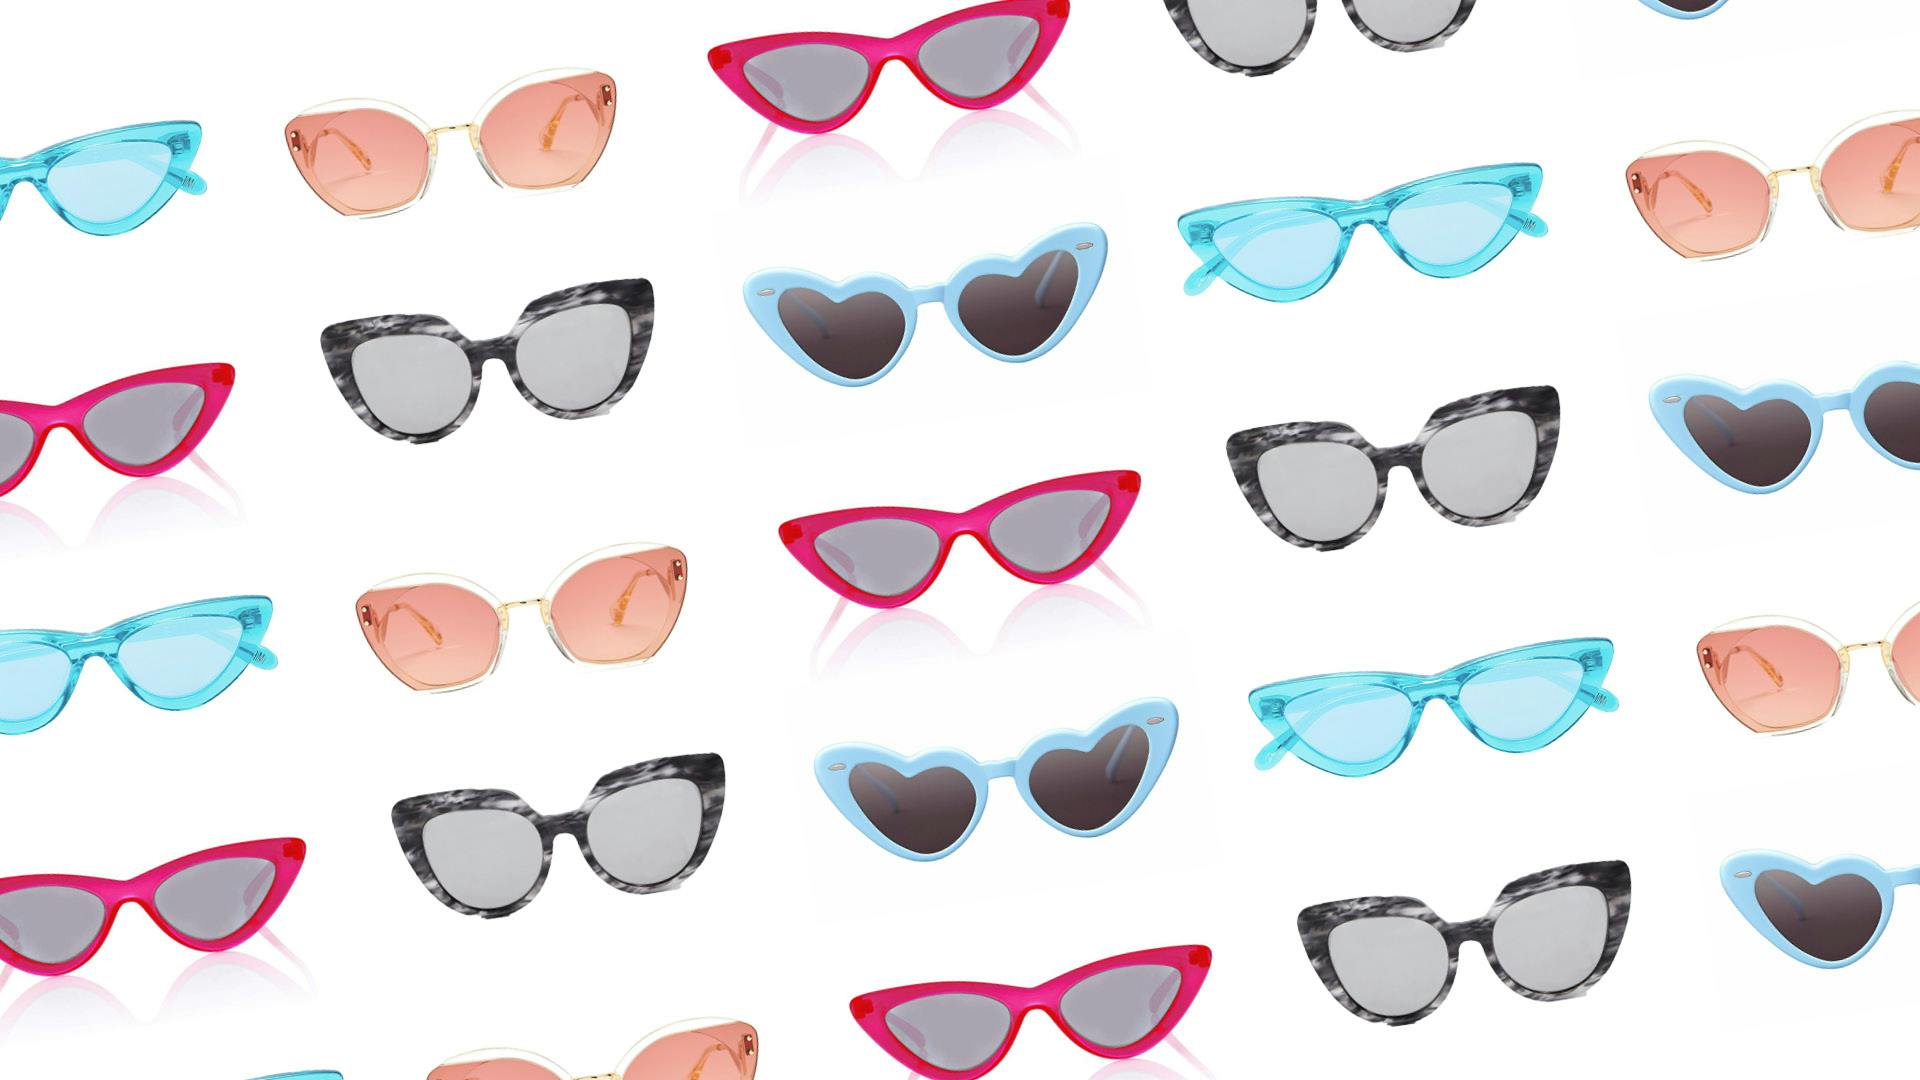 Sunglasses edit style for gojo : r/FortNiteBR